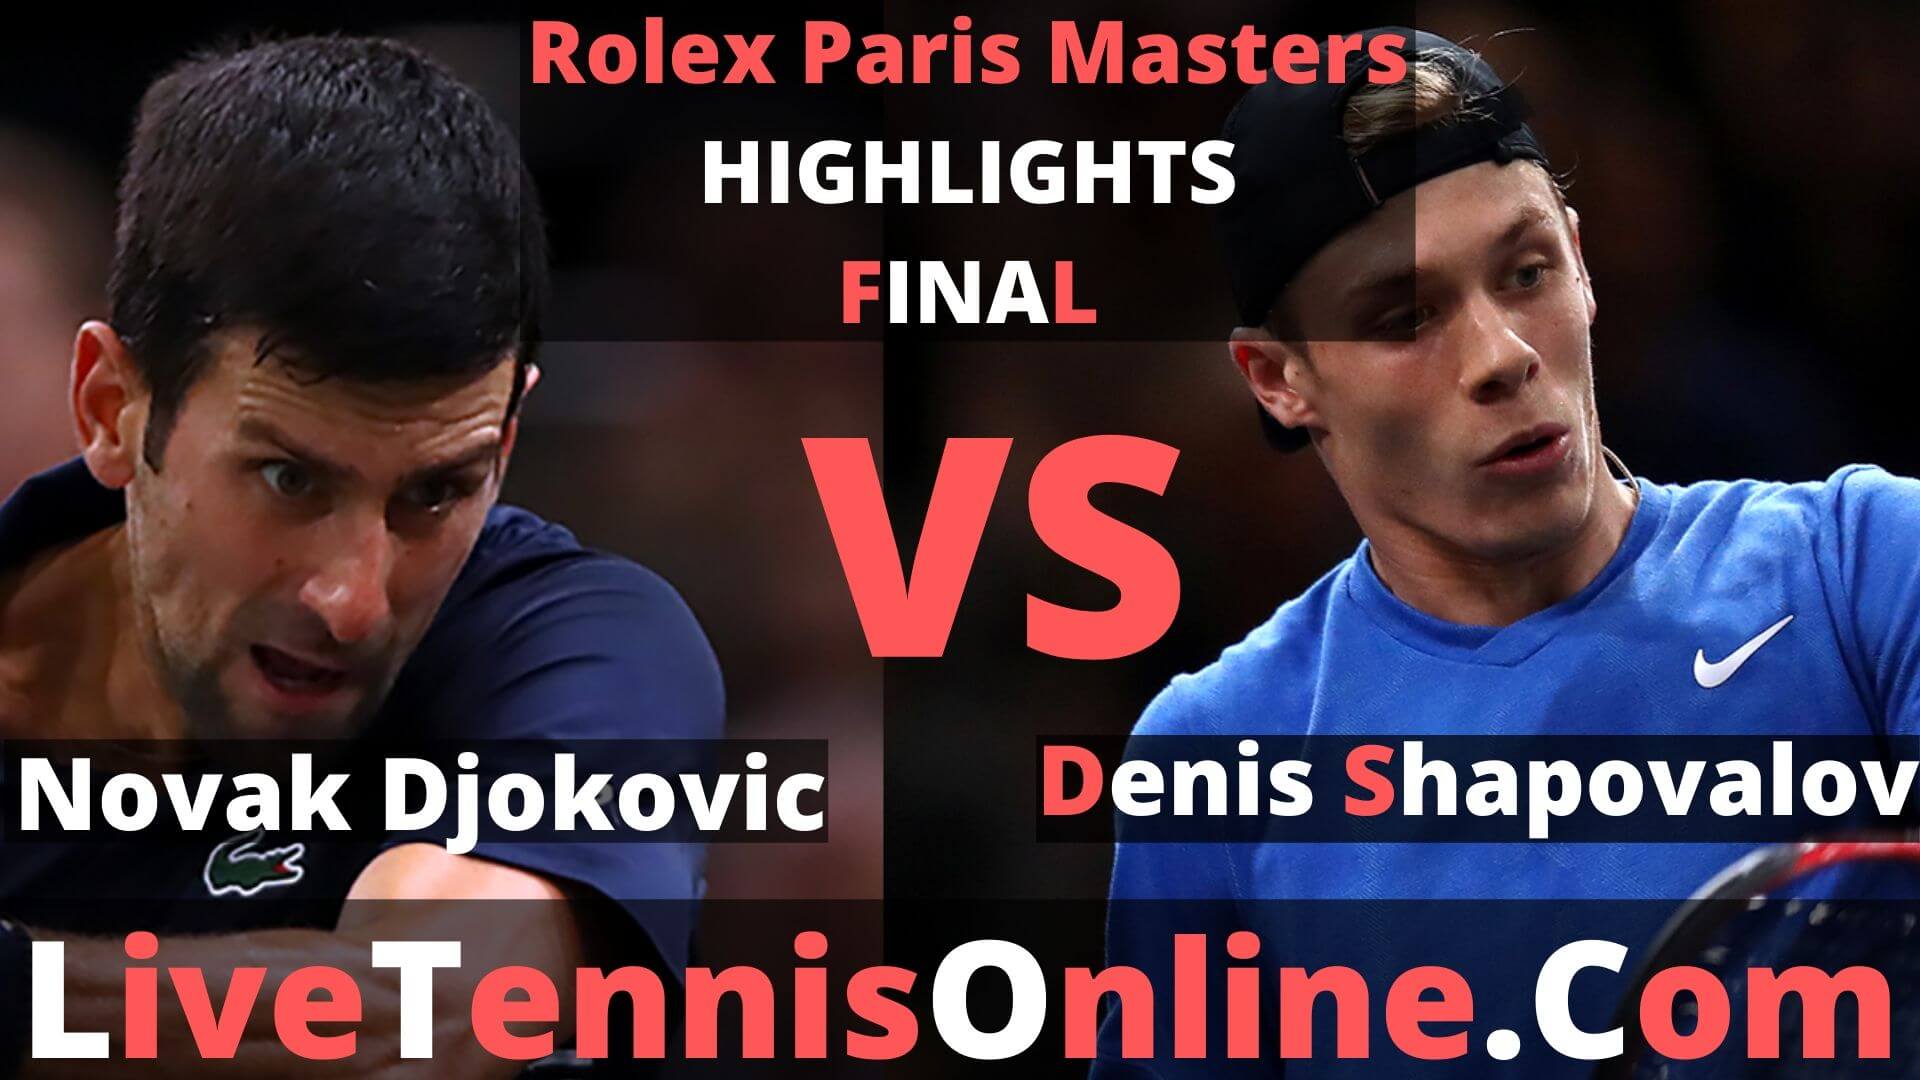 Novak Djokovic Vs Denis Shapovalov Highlights 2019 Rolex Paris Masters Final